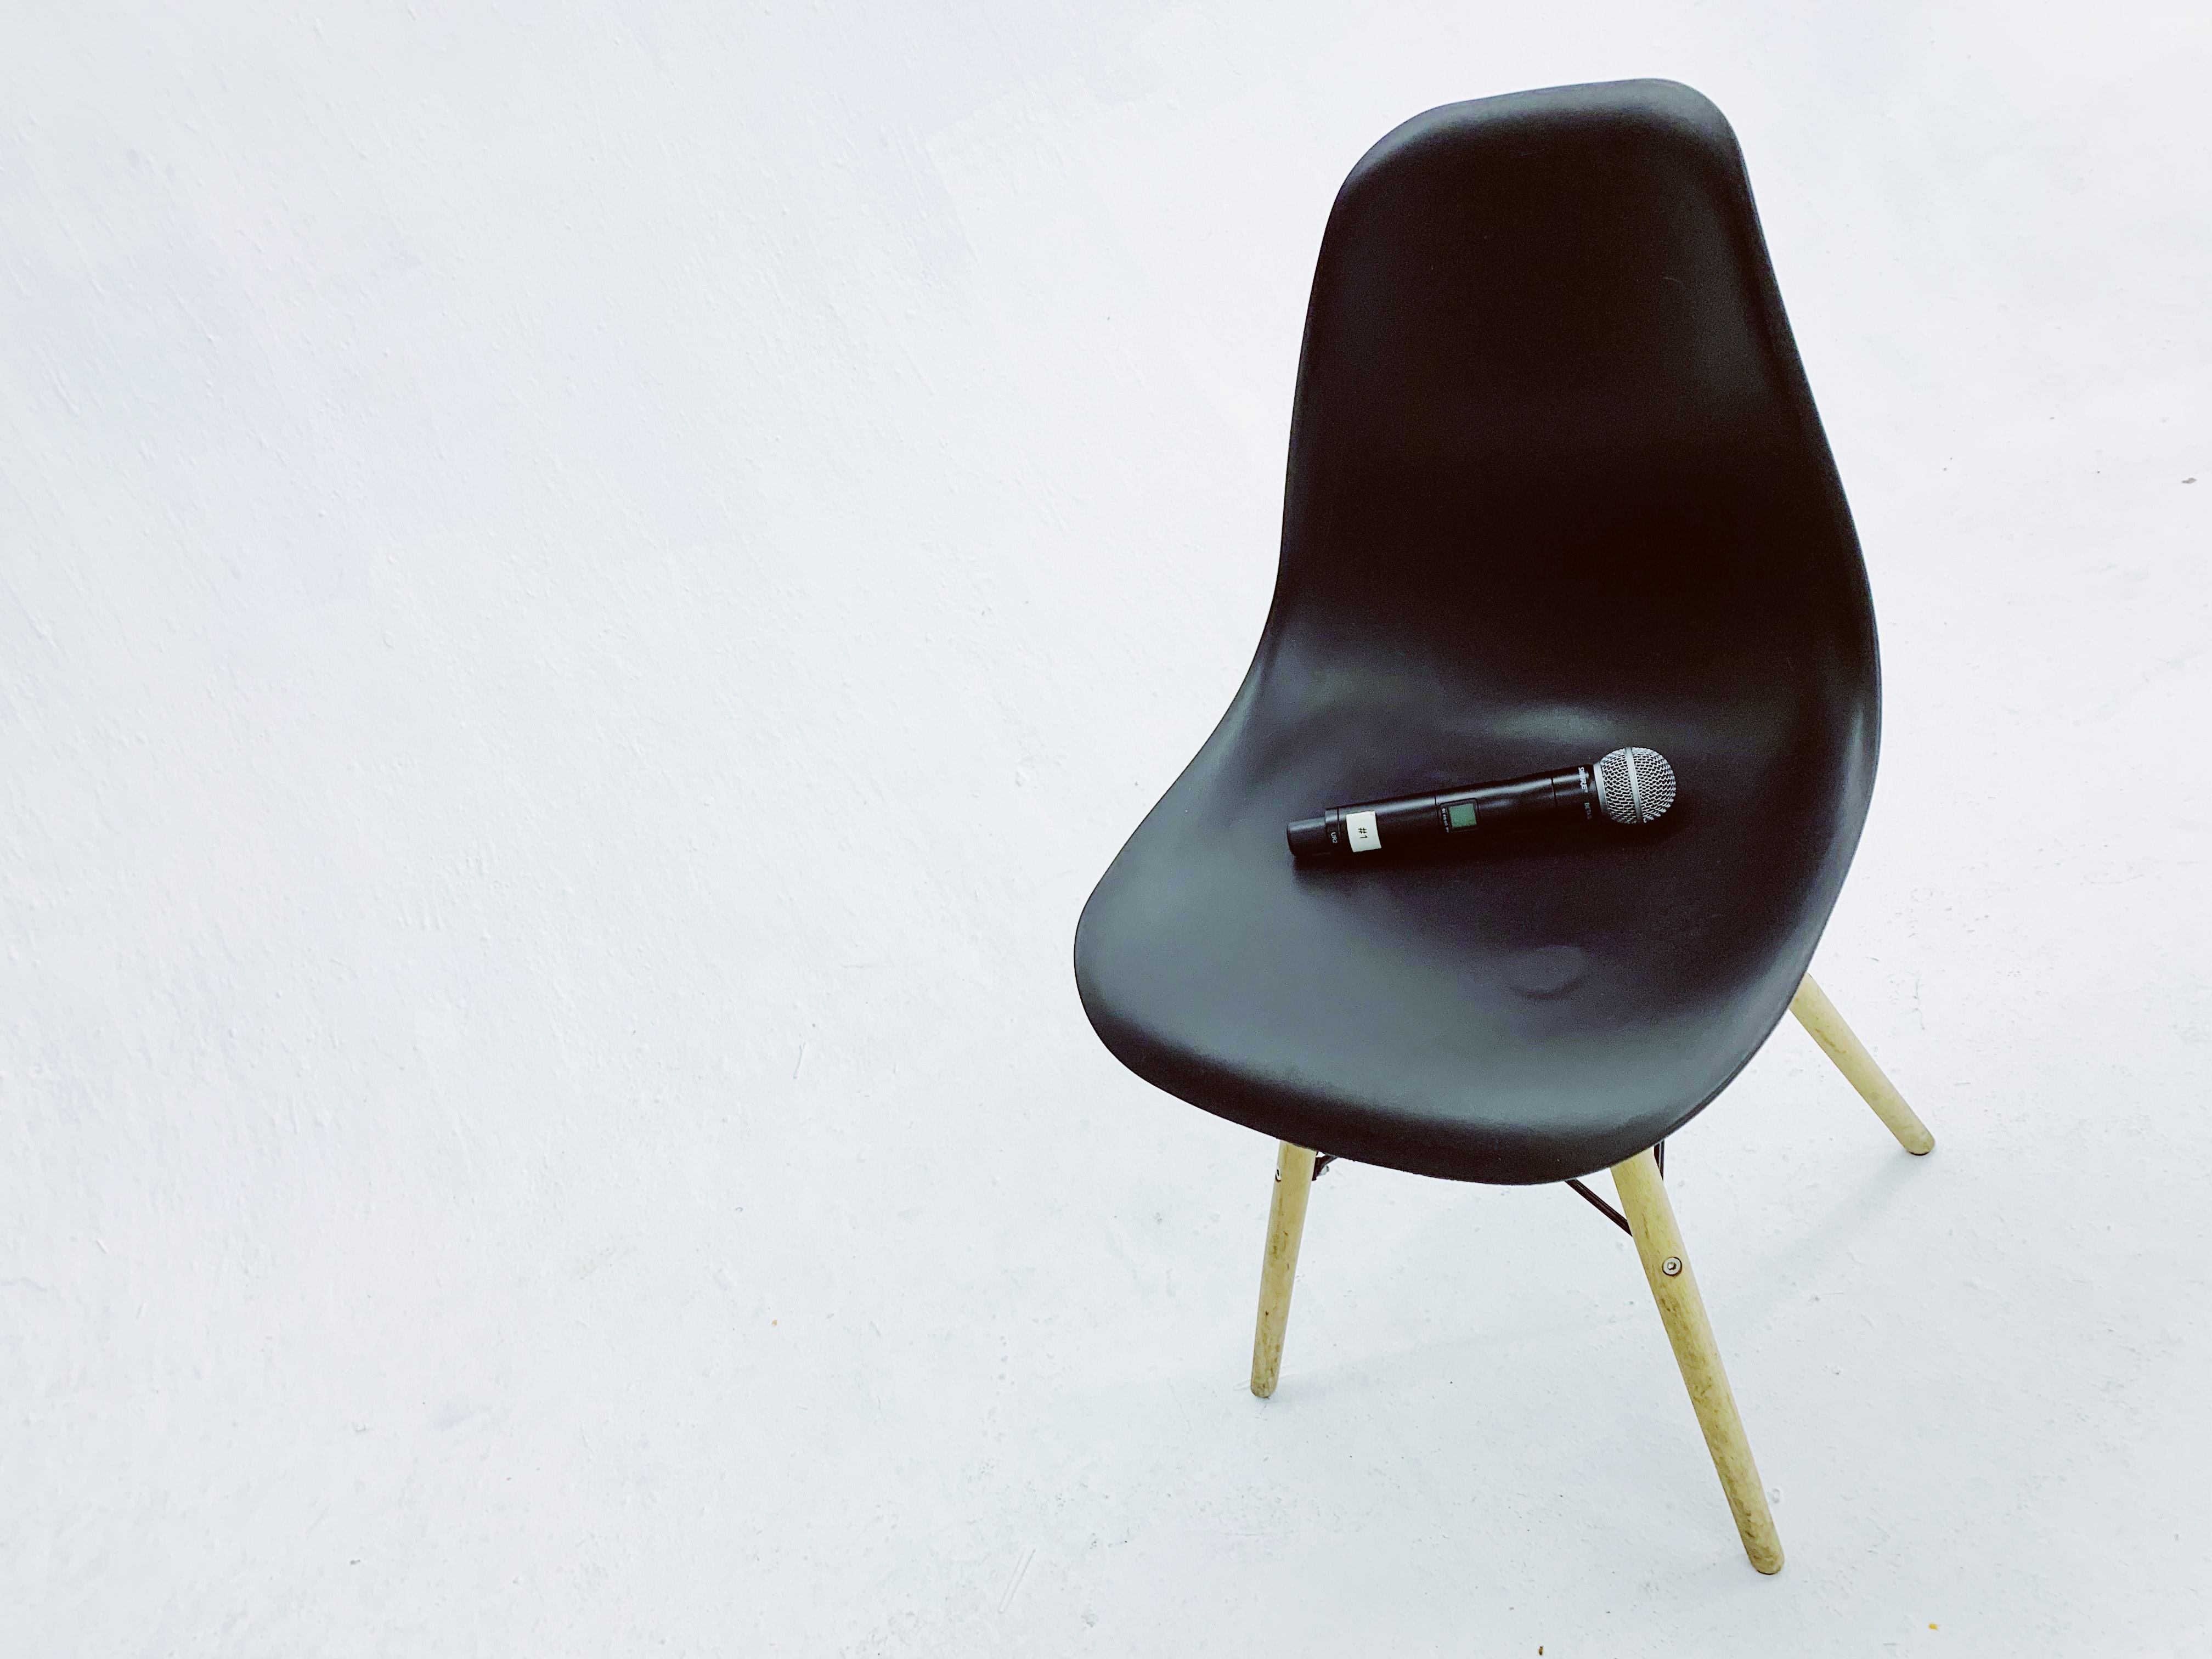 black wireless microphone on black armless chair